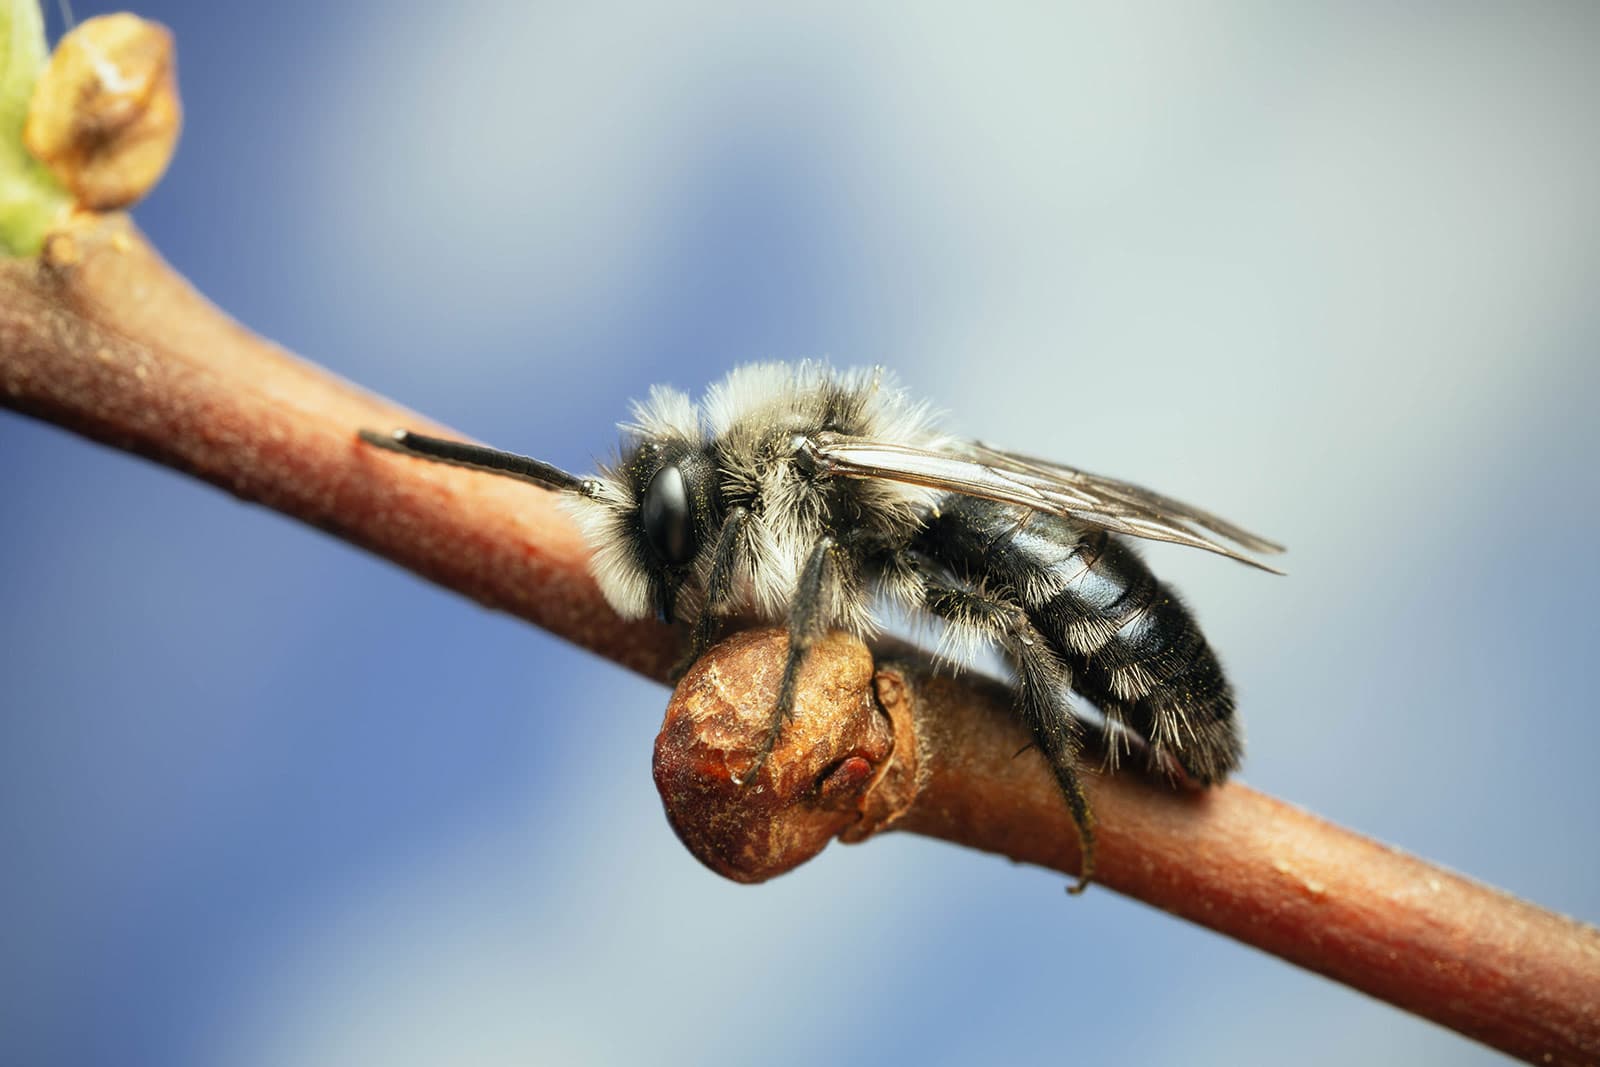 Ashy Mining Bees (Andrenidae cineraria)